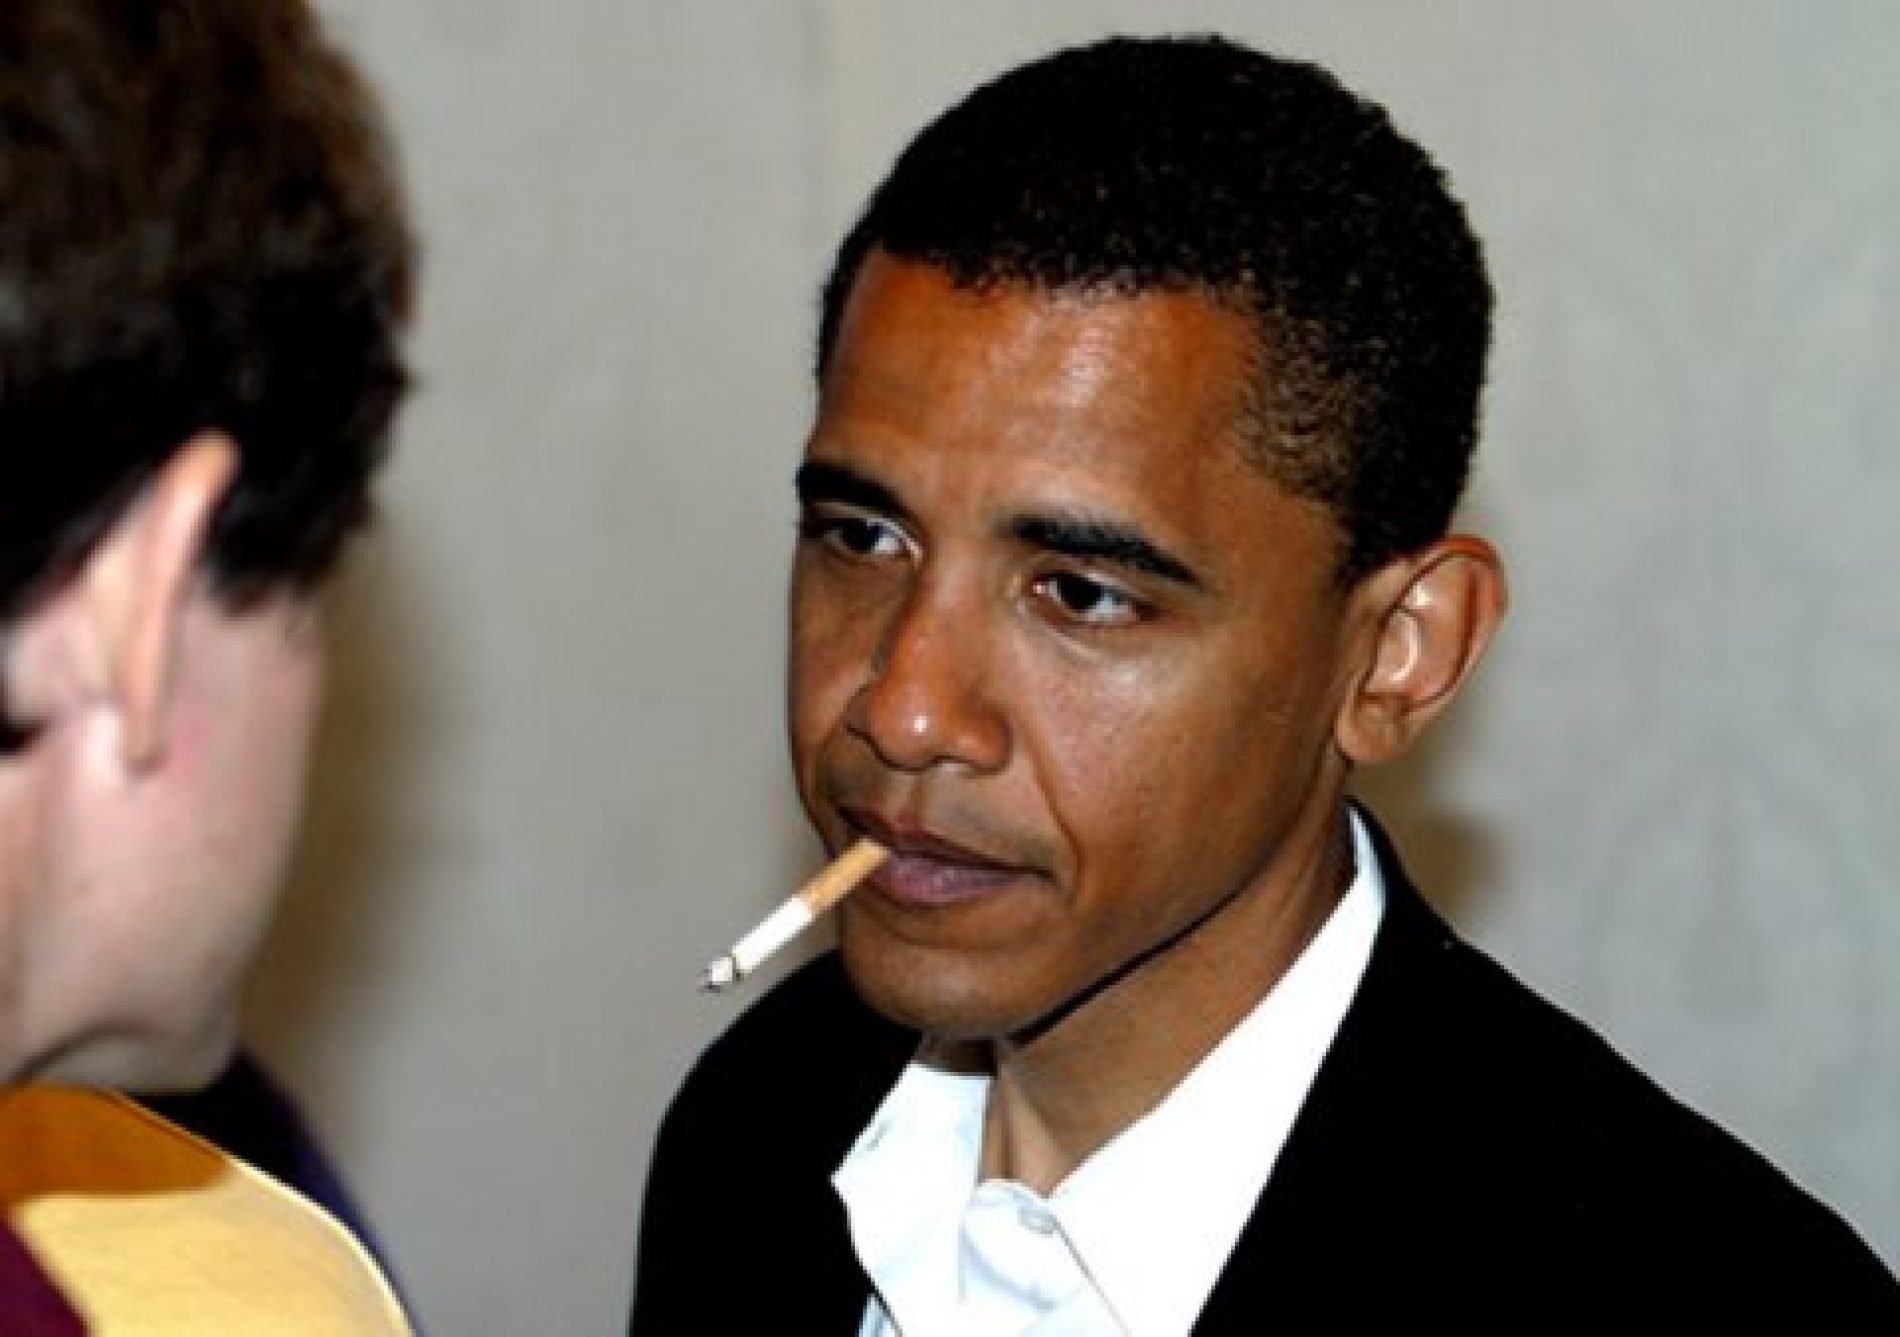 President Obama Signs Kennedy/Waxman Tobacco Bill into LAW